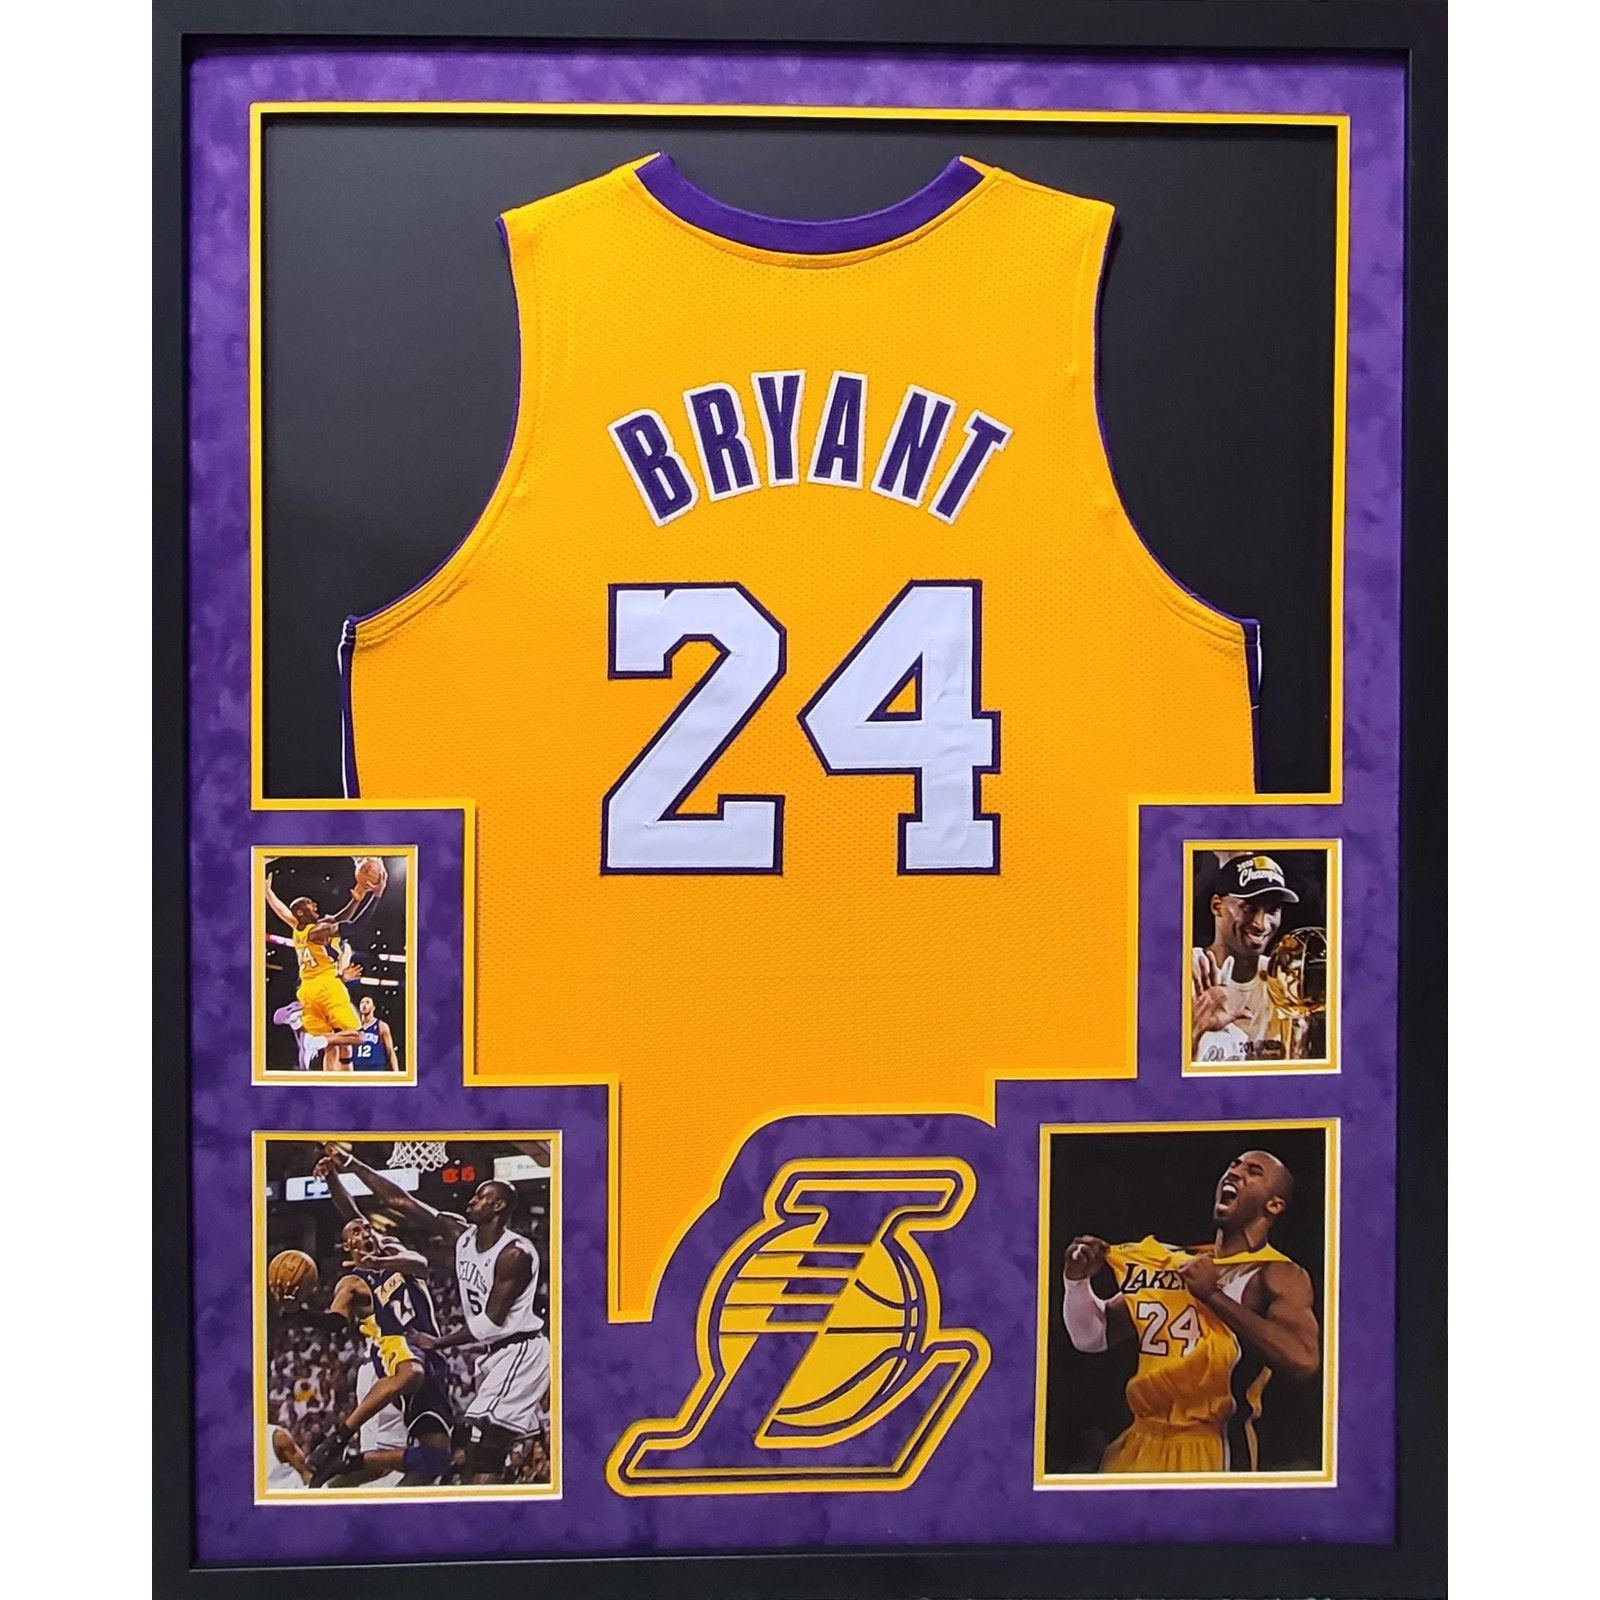 Art Gala Inc. - NBA Jersey🏀 Framed. This Jersey Number